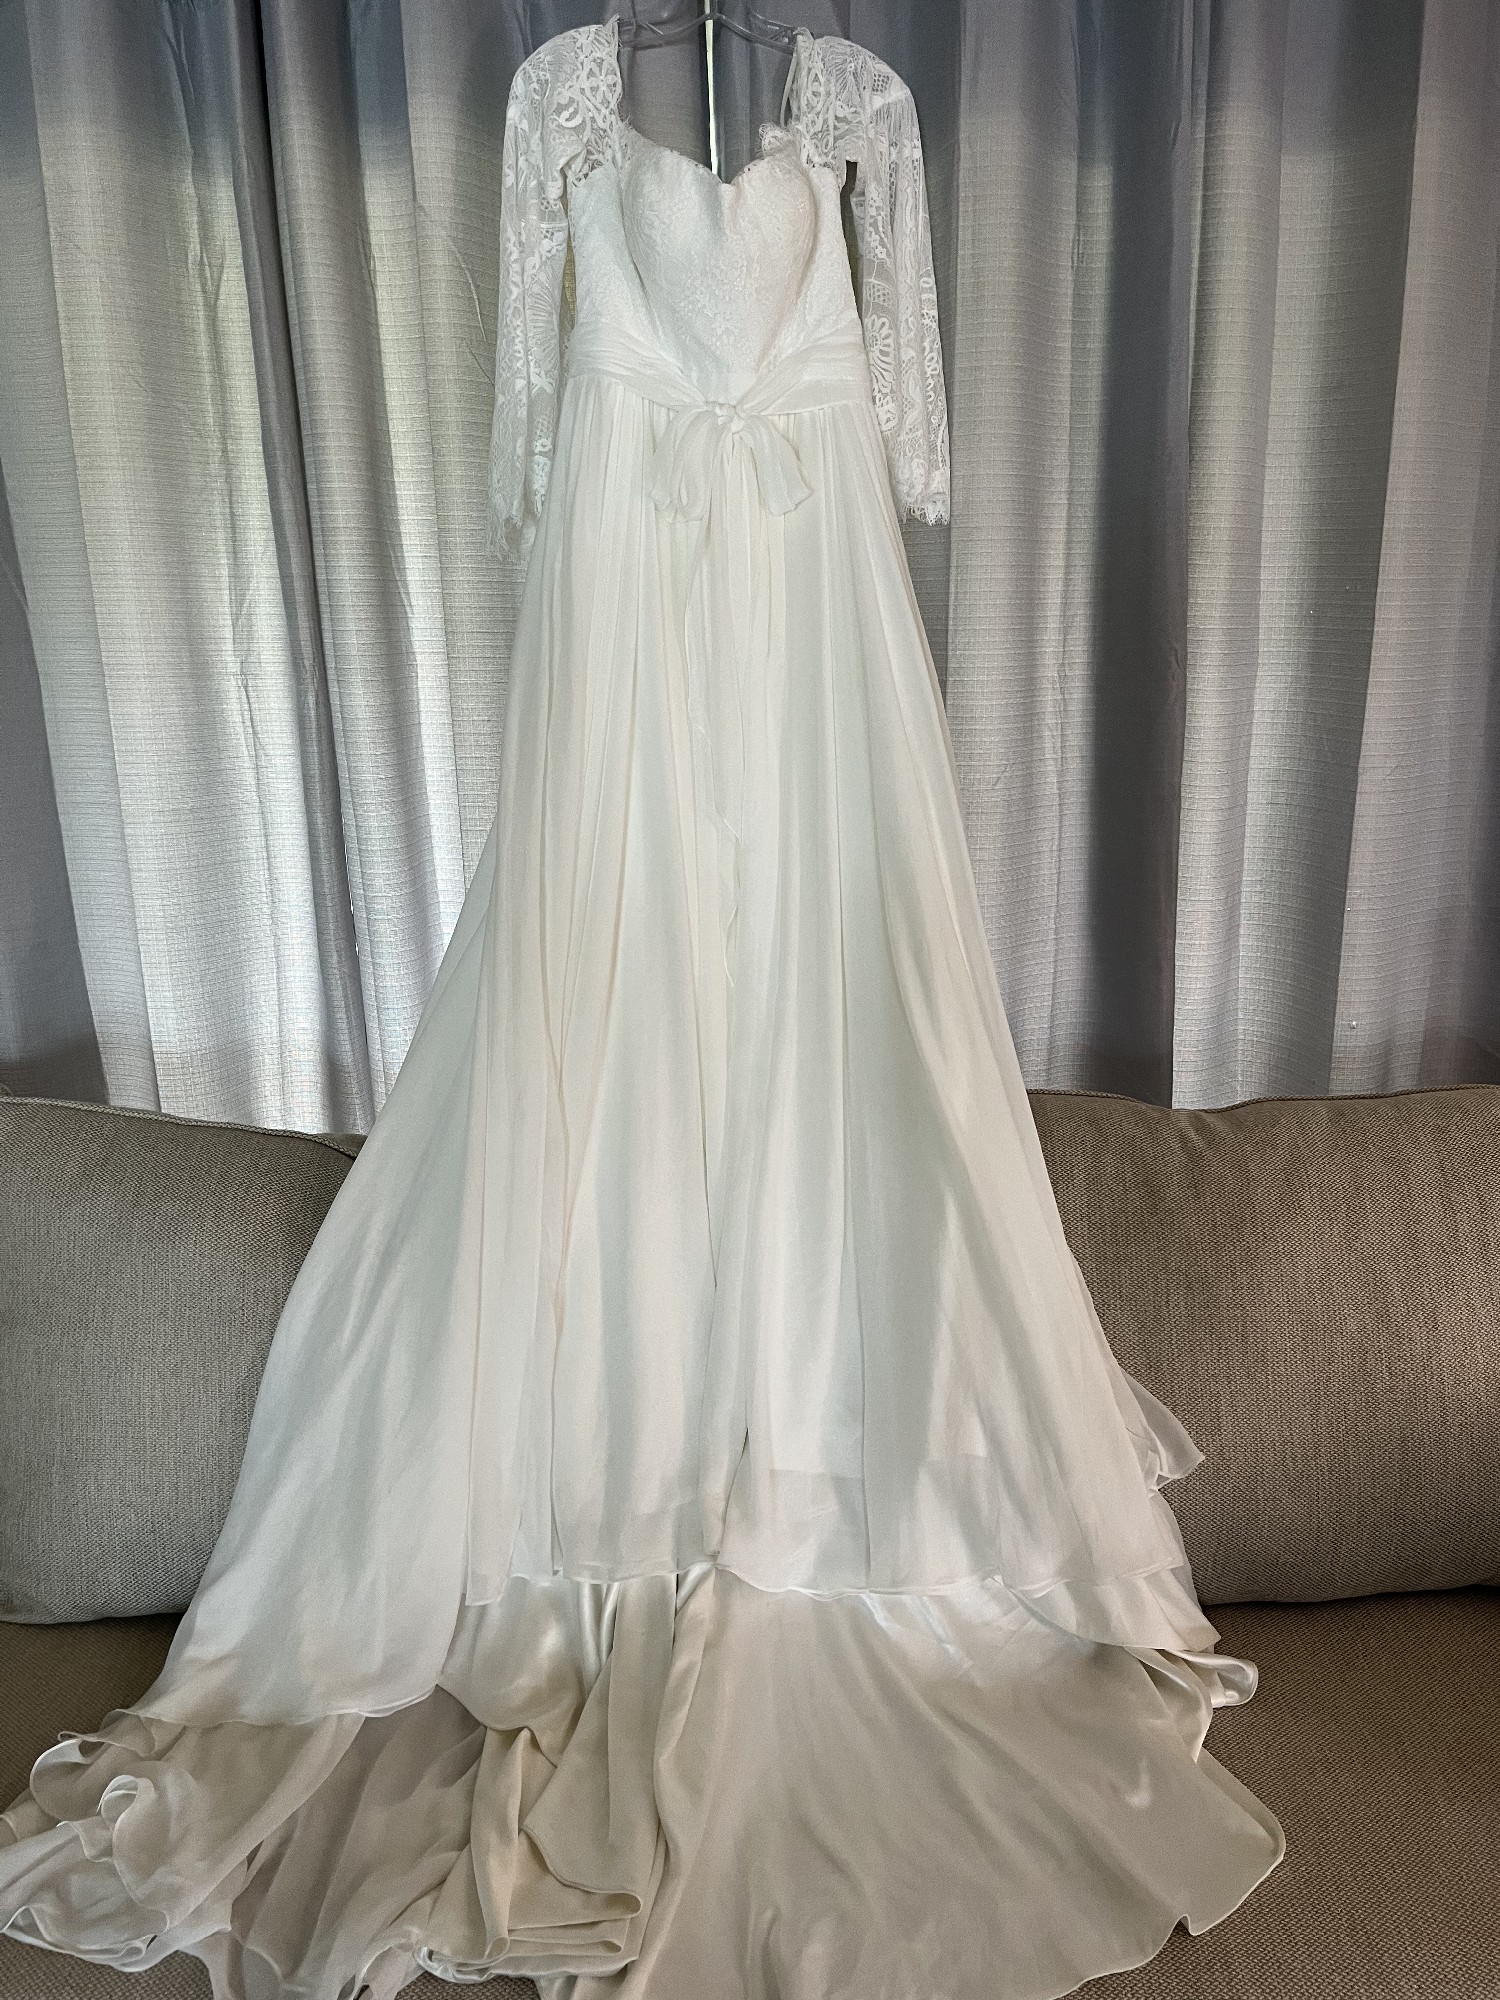 Evie Young Bridal Chance Wedding Dress - Stillwhite